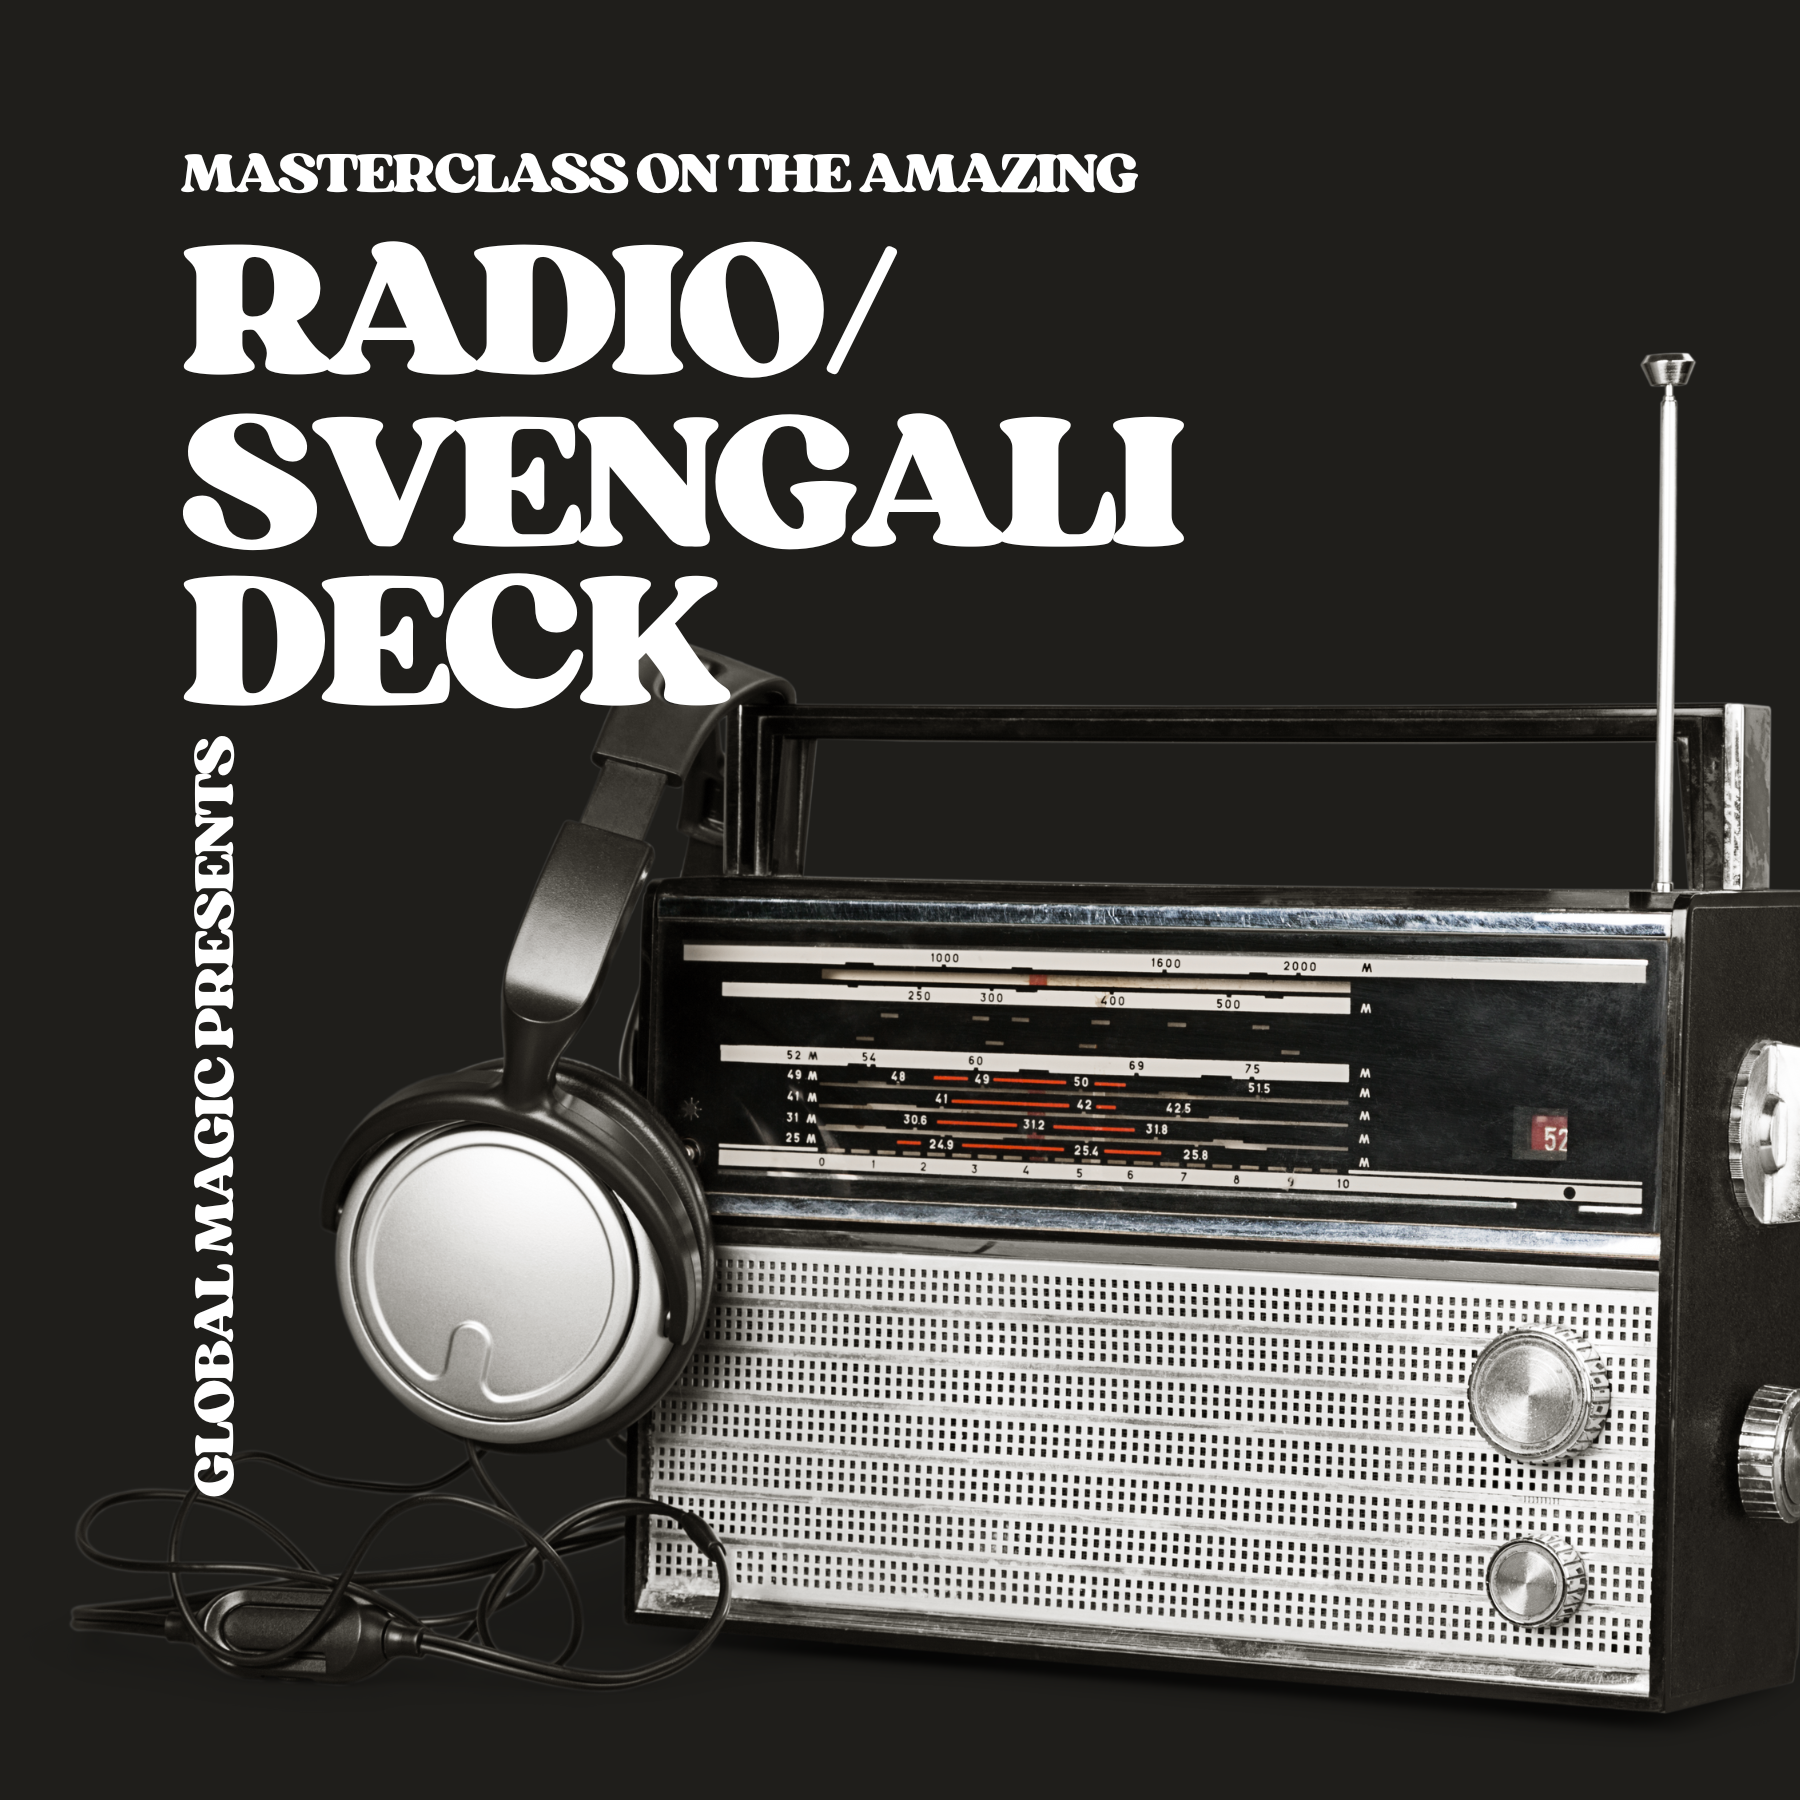 Svengali/ Radio Deck Masterclass (Deck and Video)